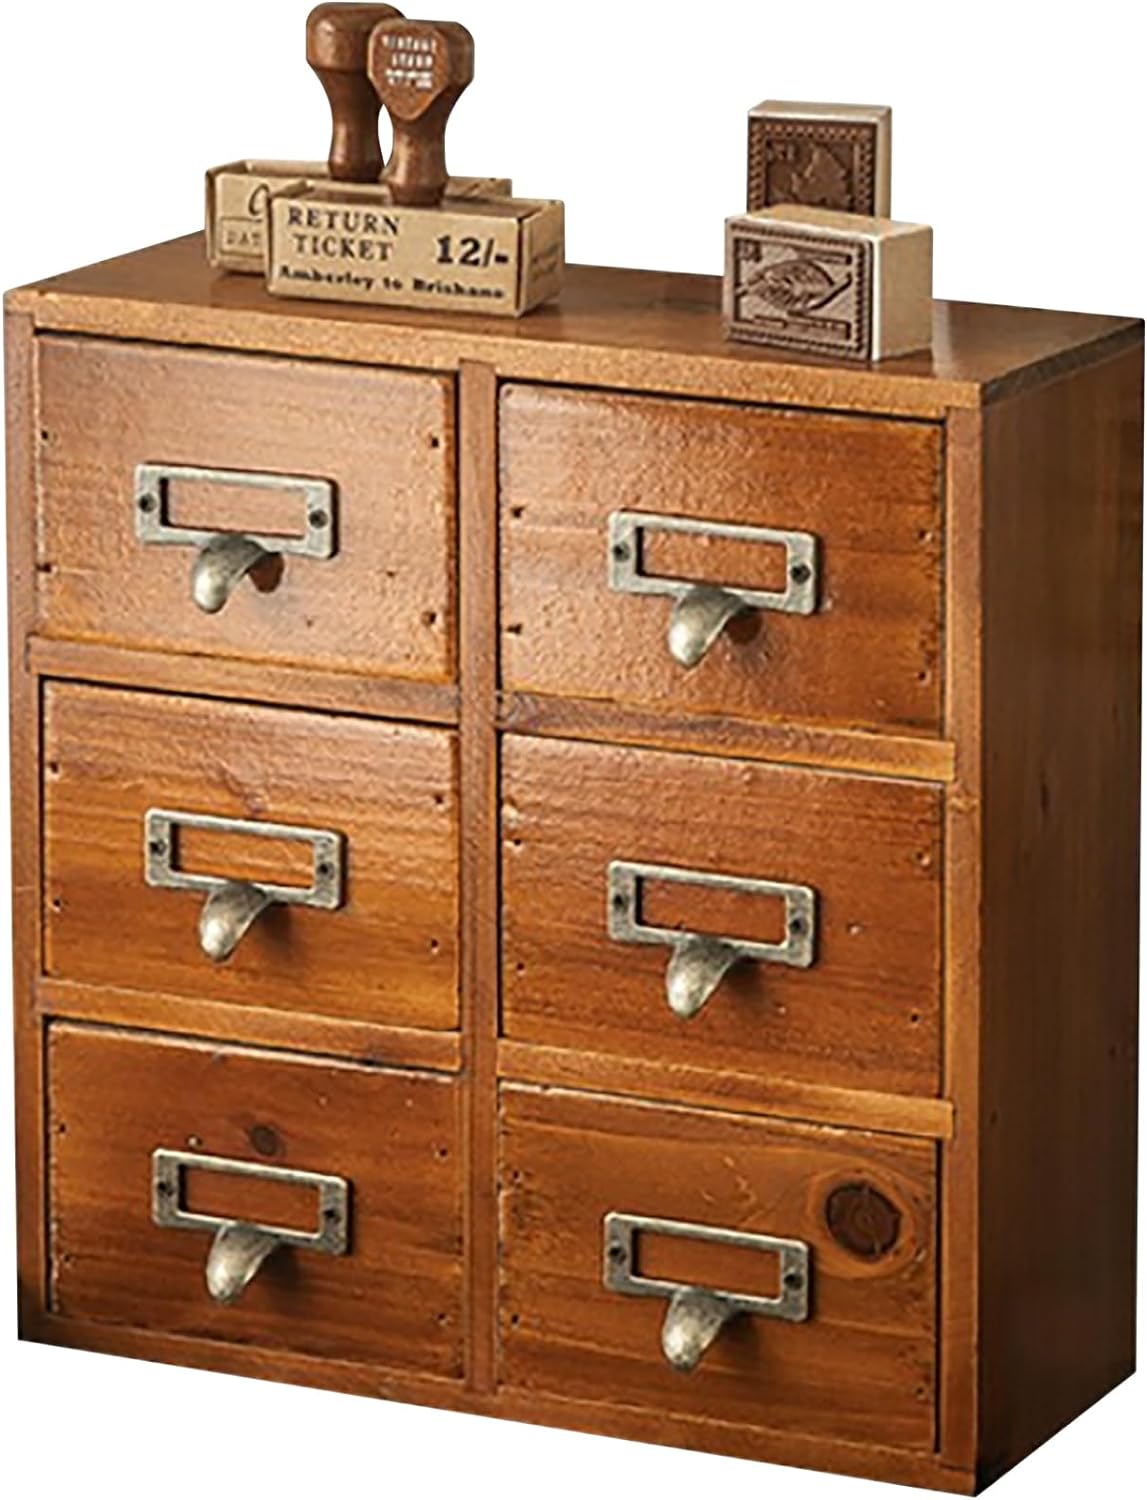 Load image into Gallery viewer, Vintage Card Catalog Drawers for Desktop - 6-Drawer Mini Wood Desktop Cabinets-Fully Assembled